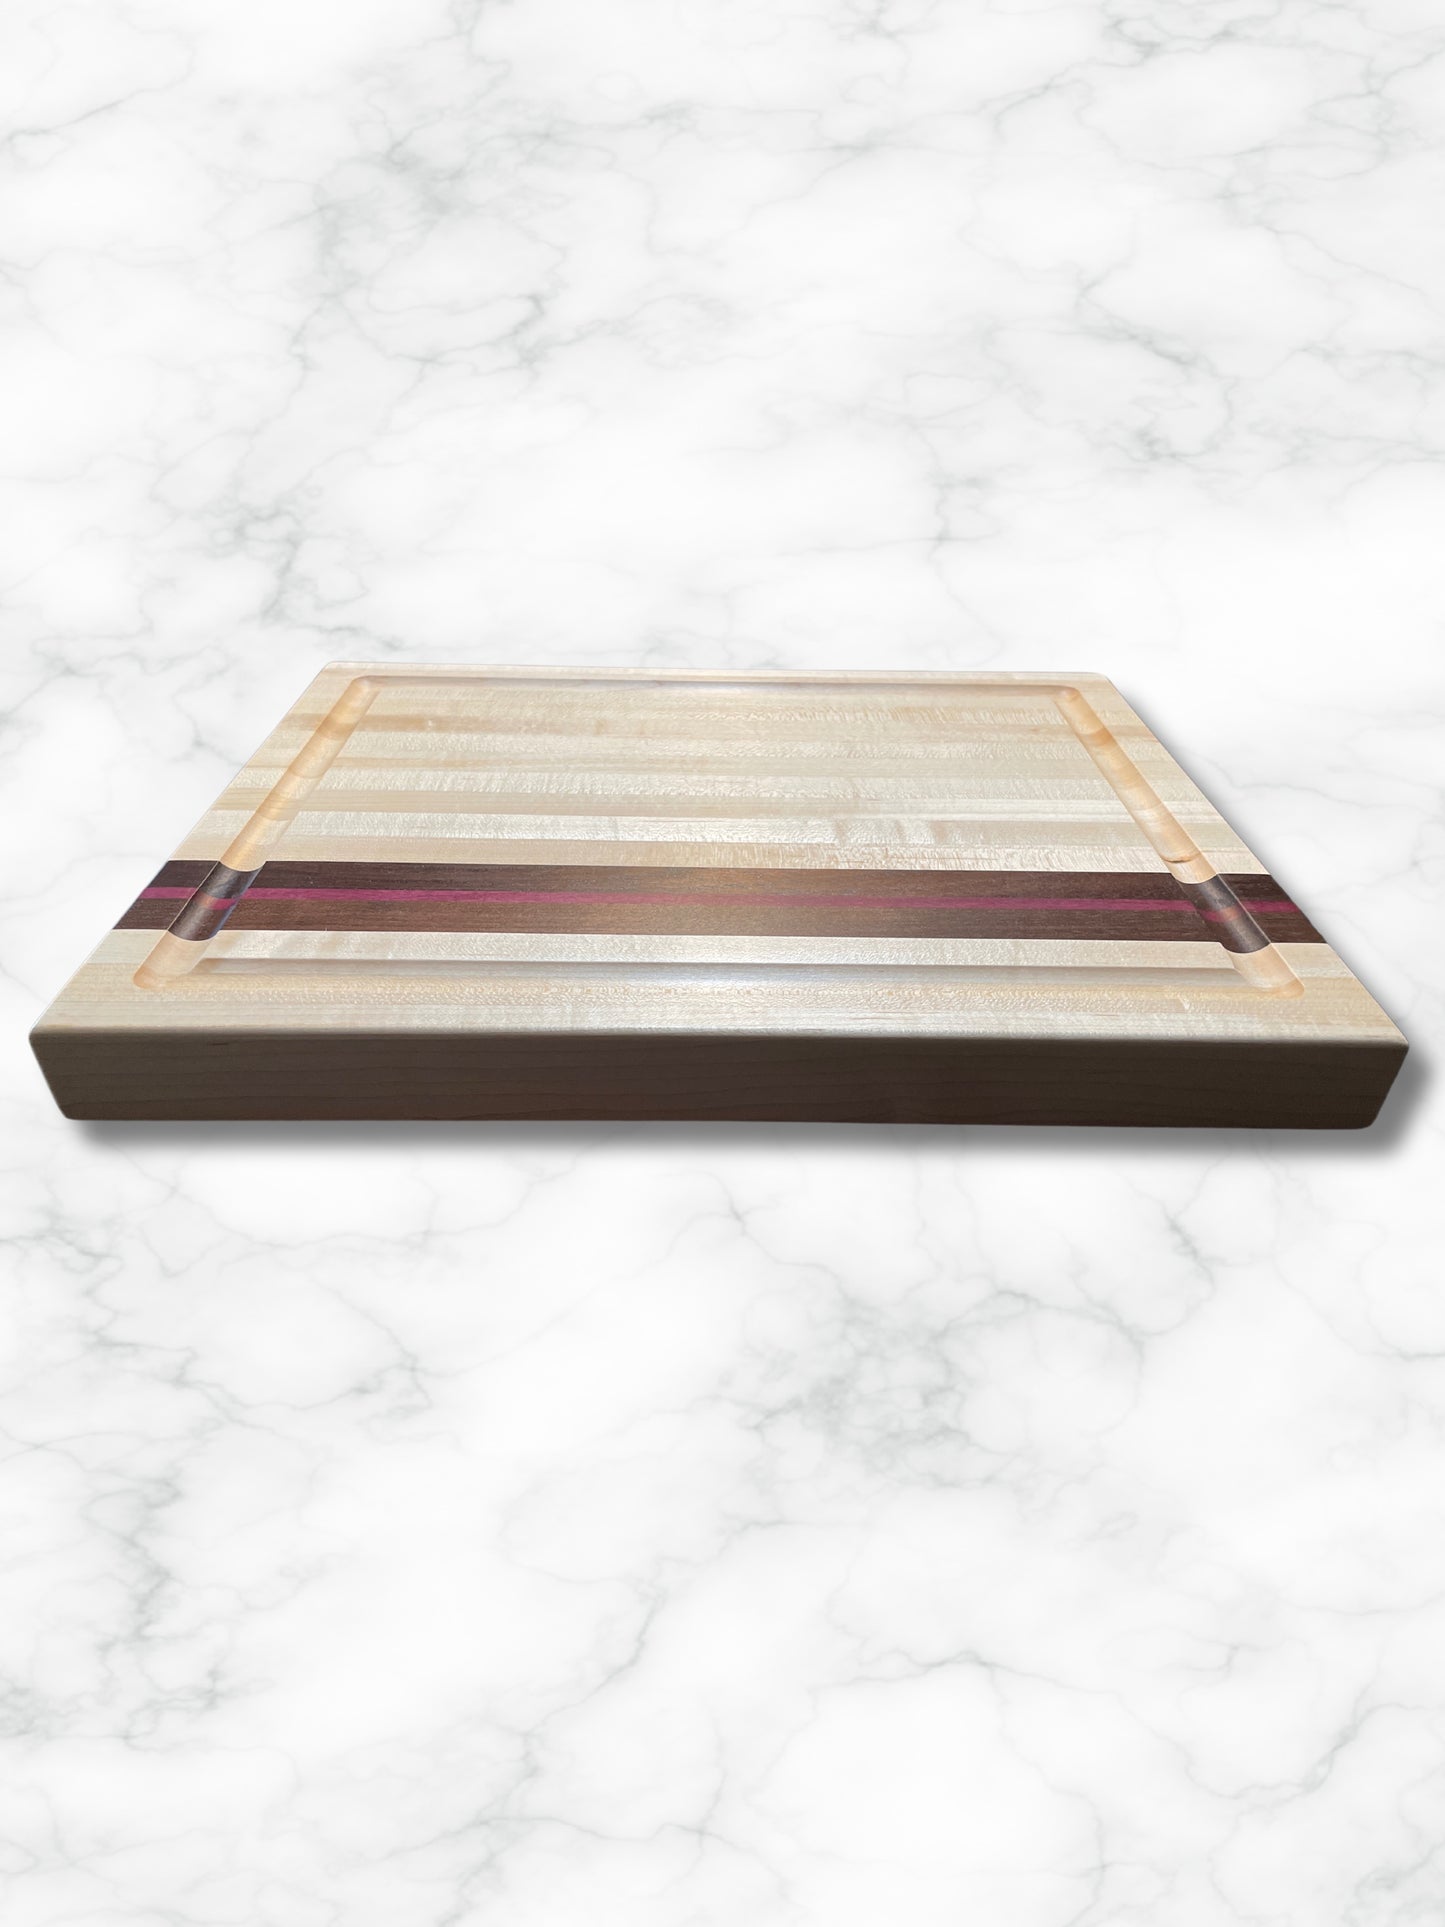 custom handmade edge grain cutting board wood maple walnut purpleheart, front view